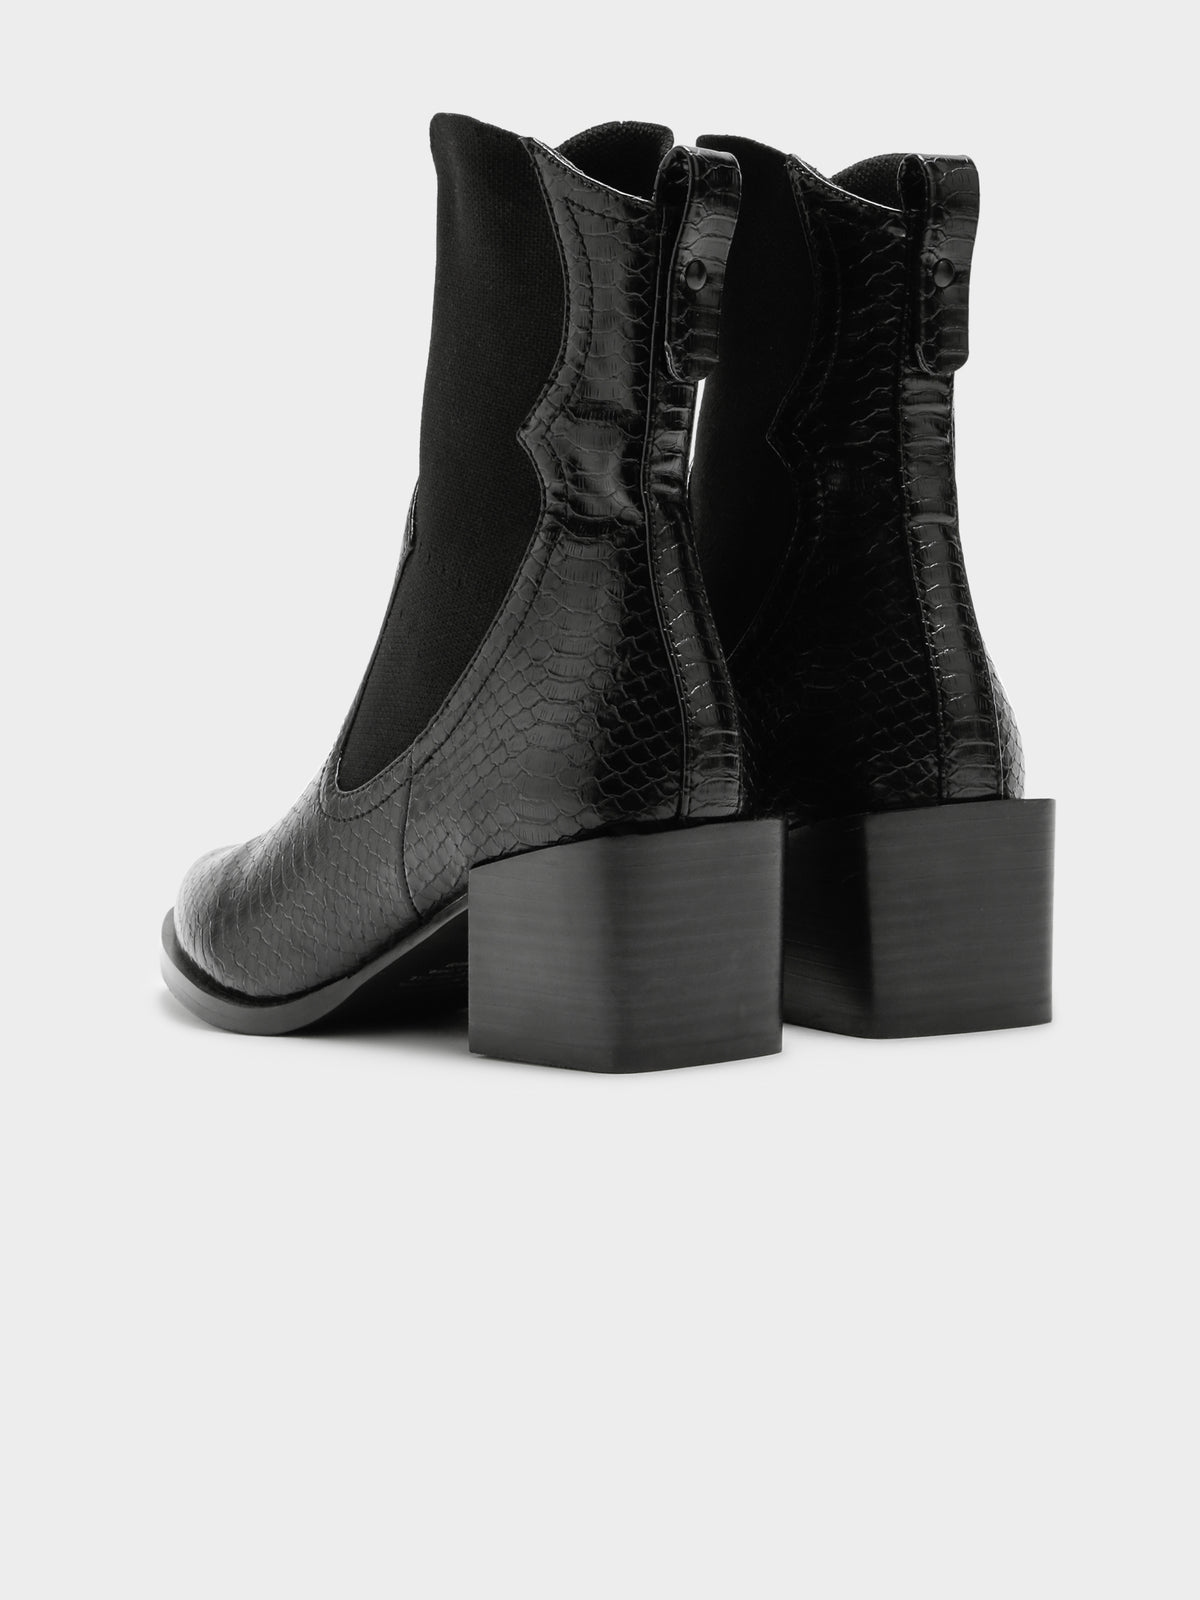 Maverick Boots in Black